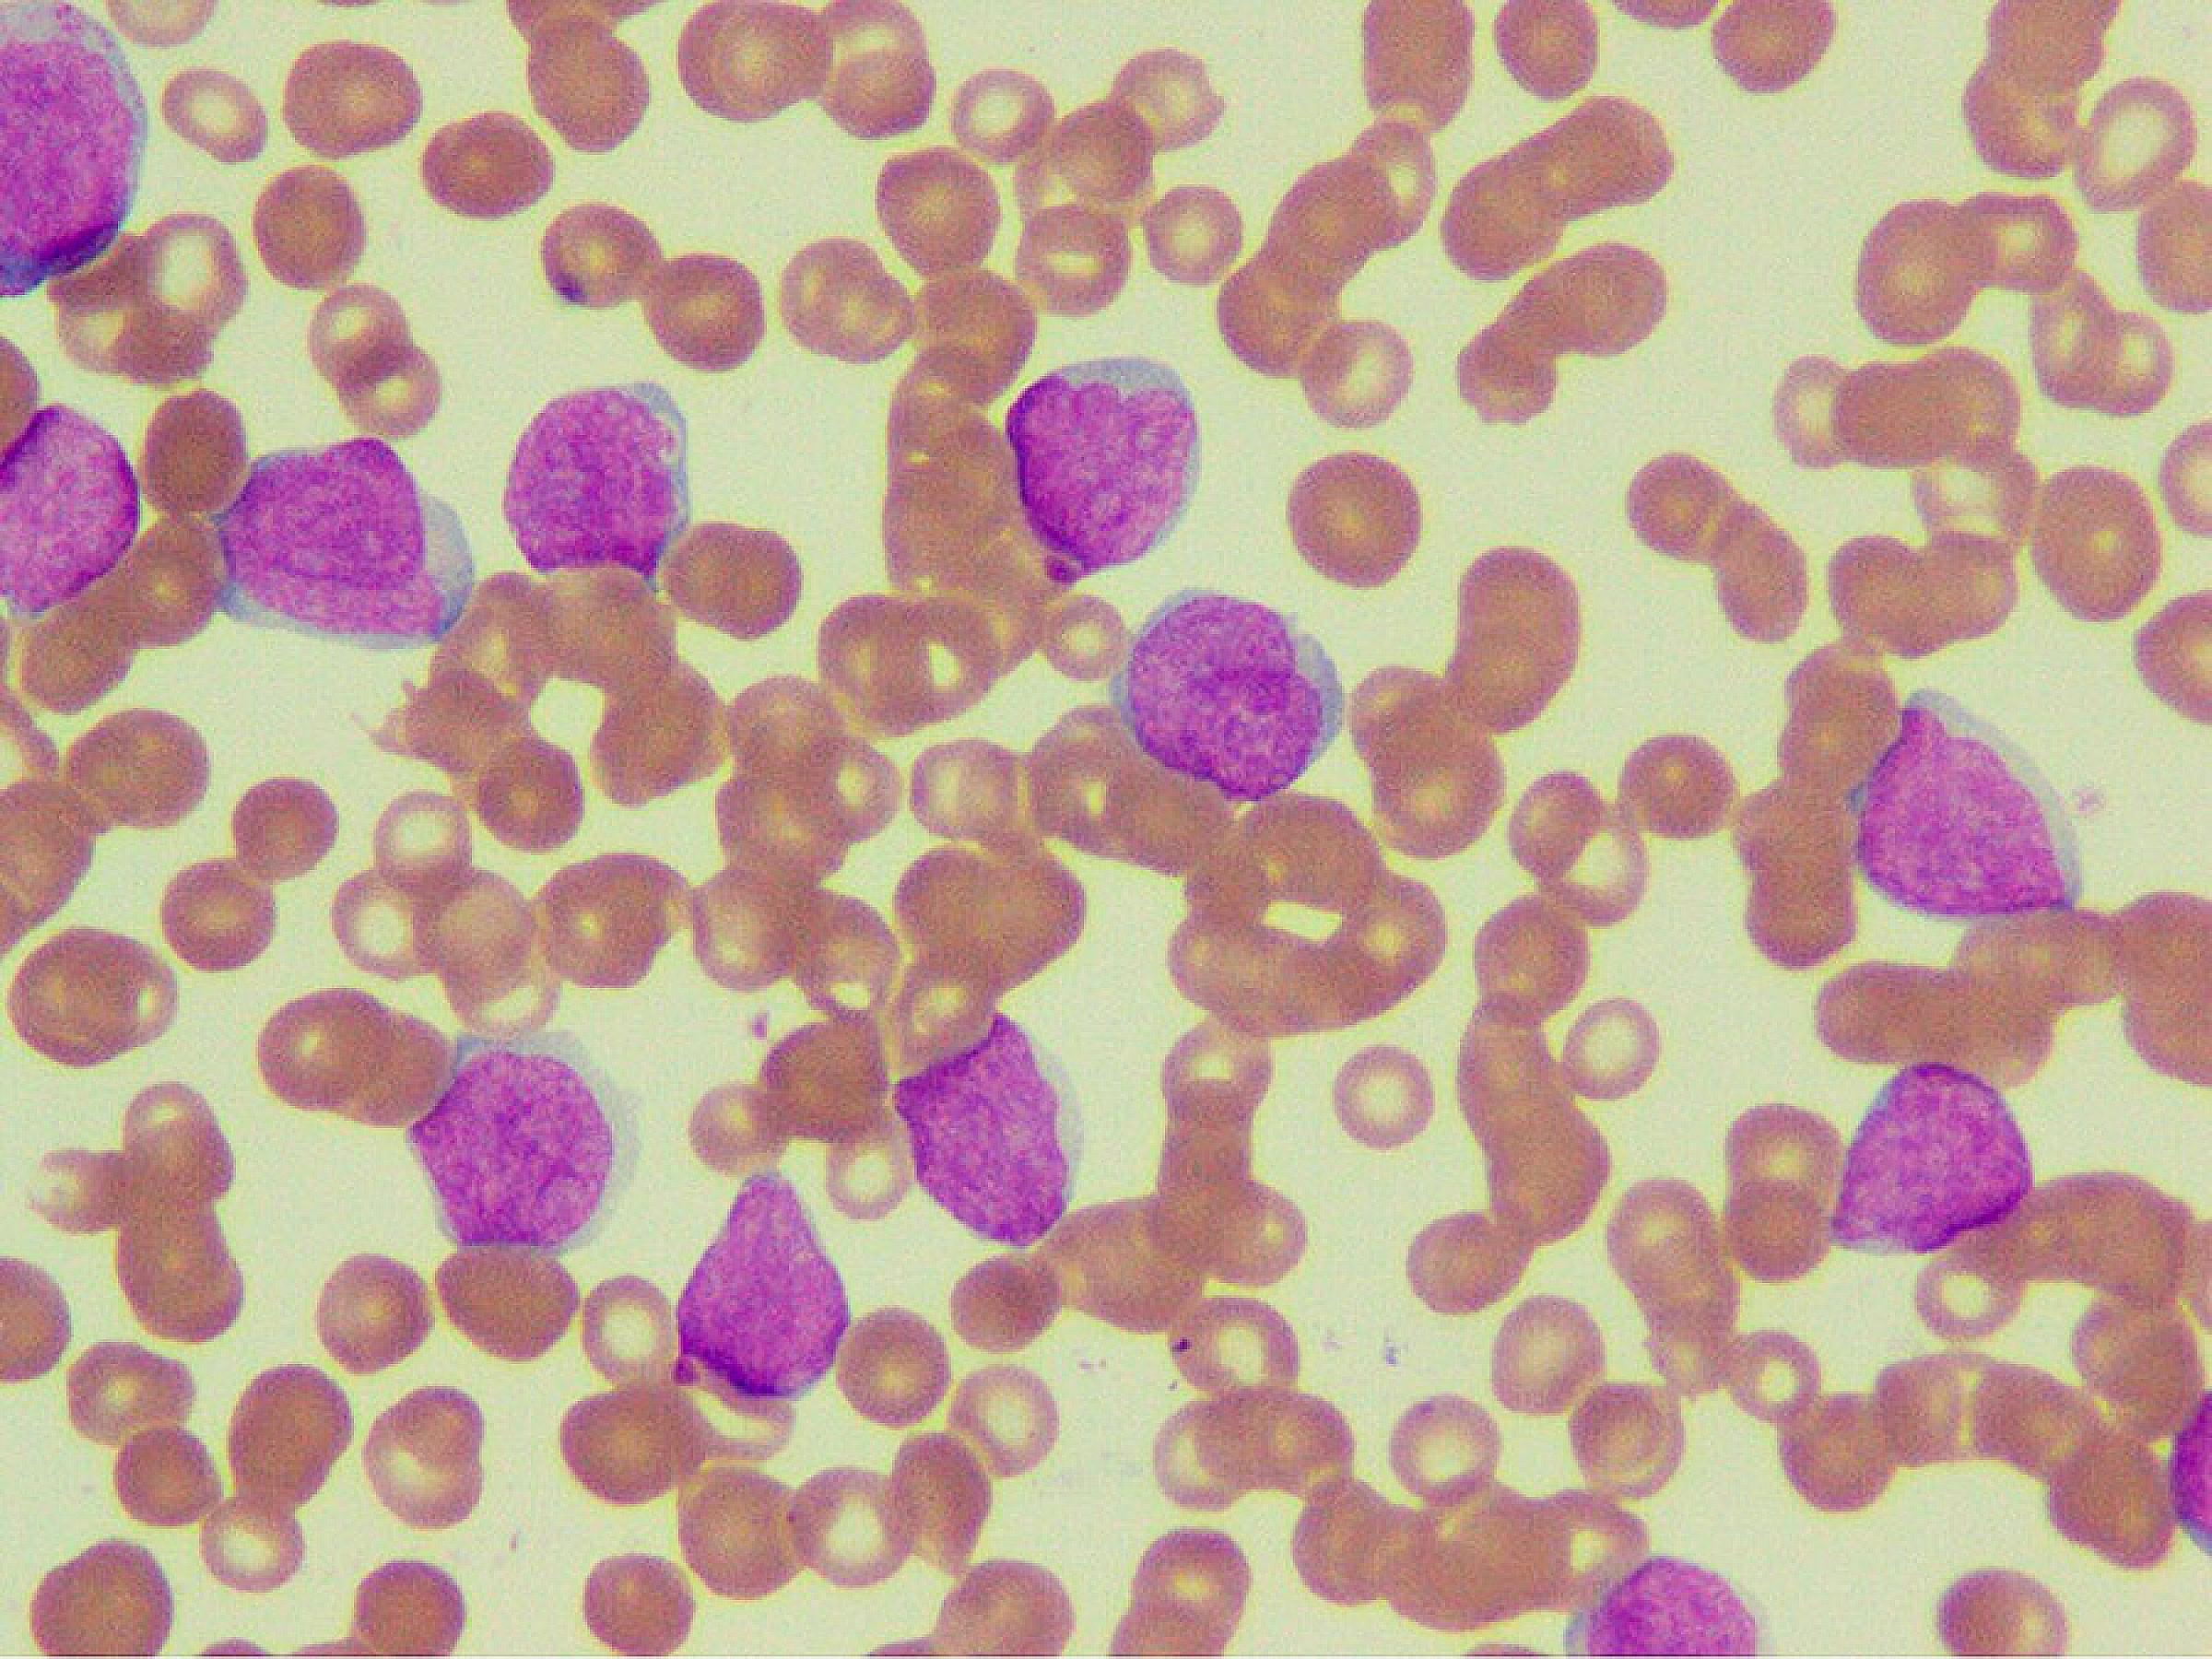 Leukemia Cells under microscope